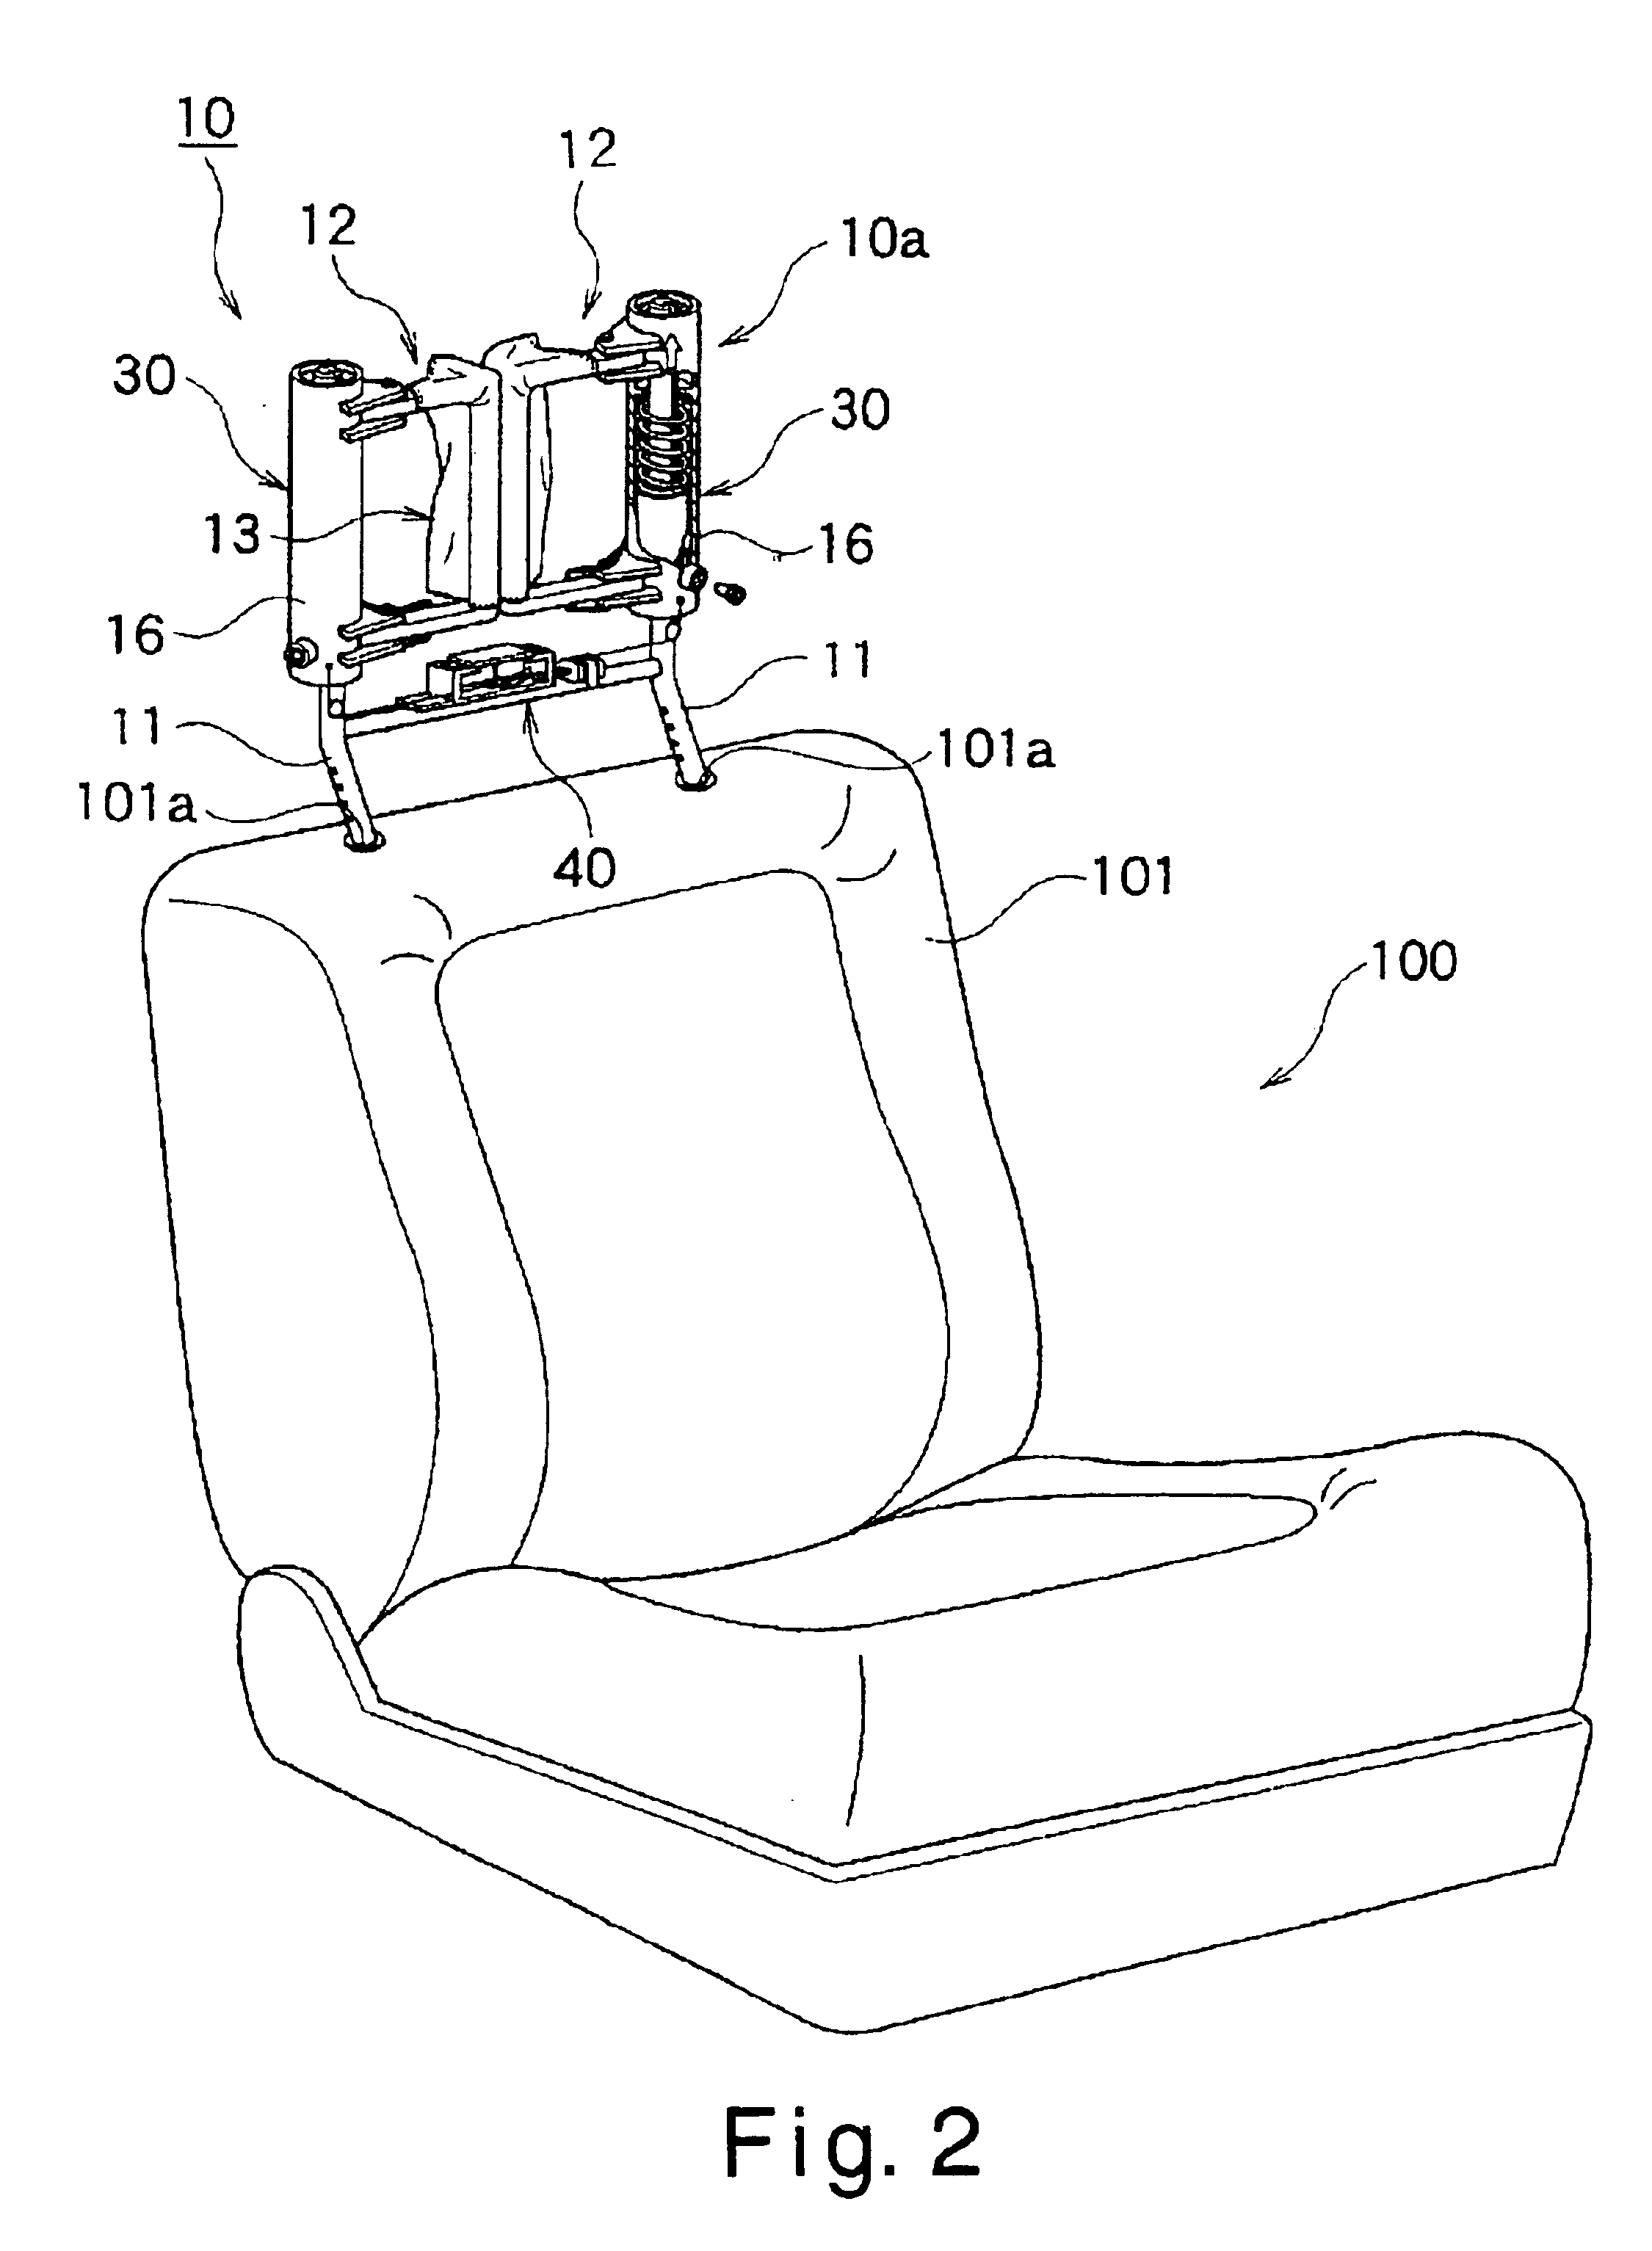 Vehicle headrest apparatus